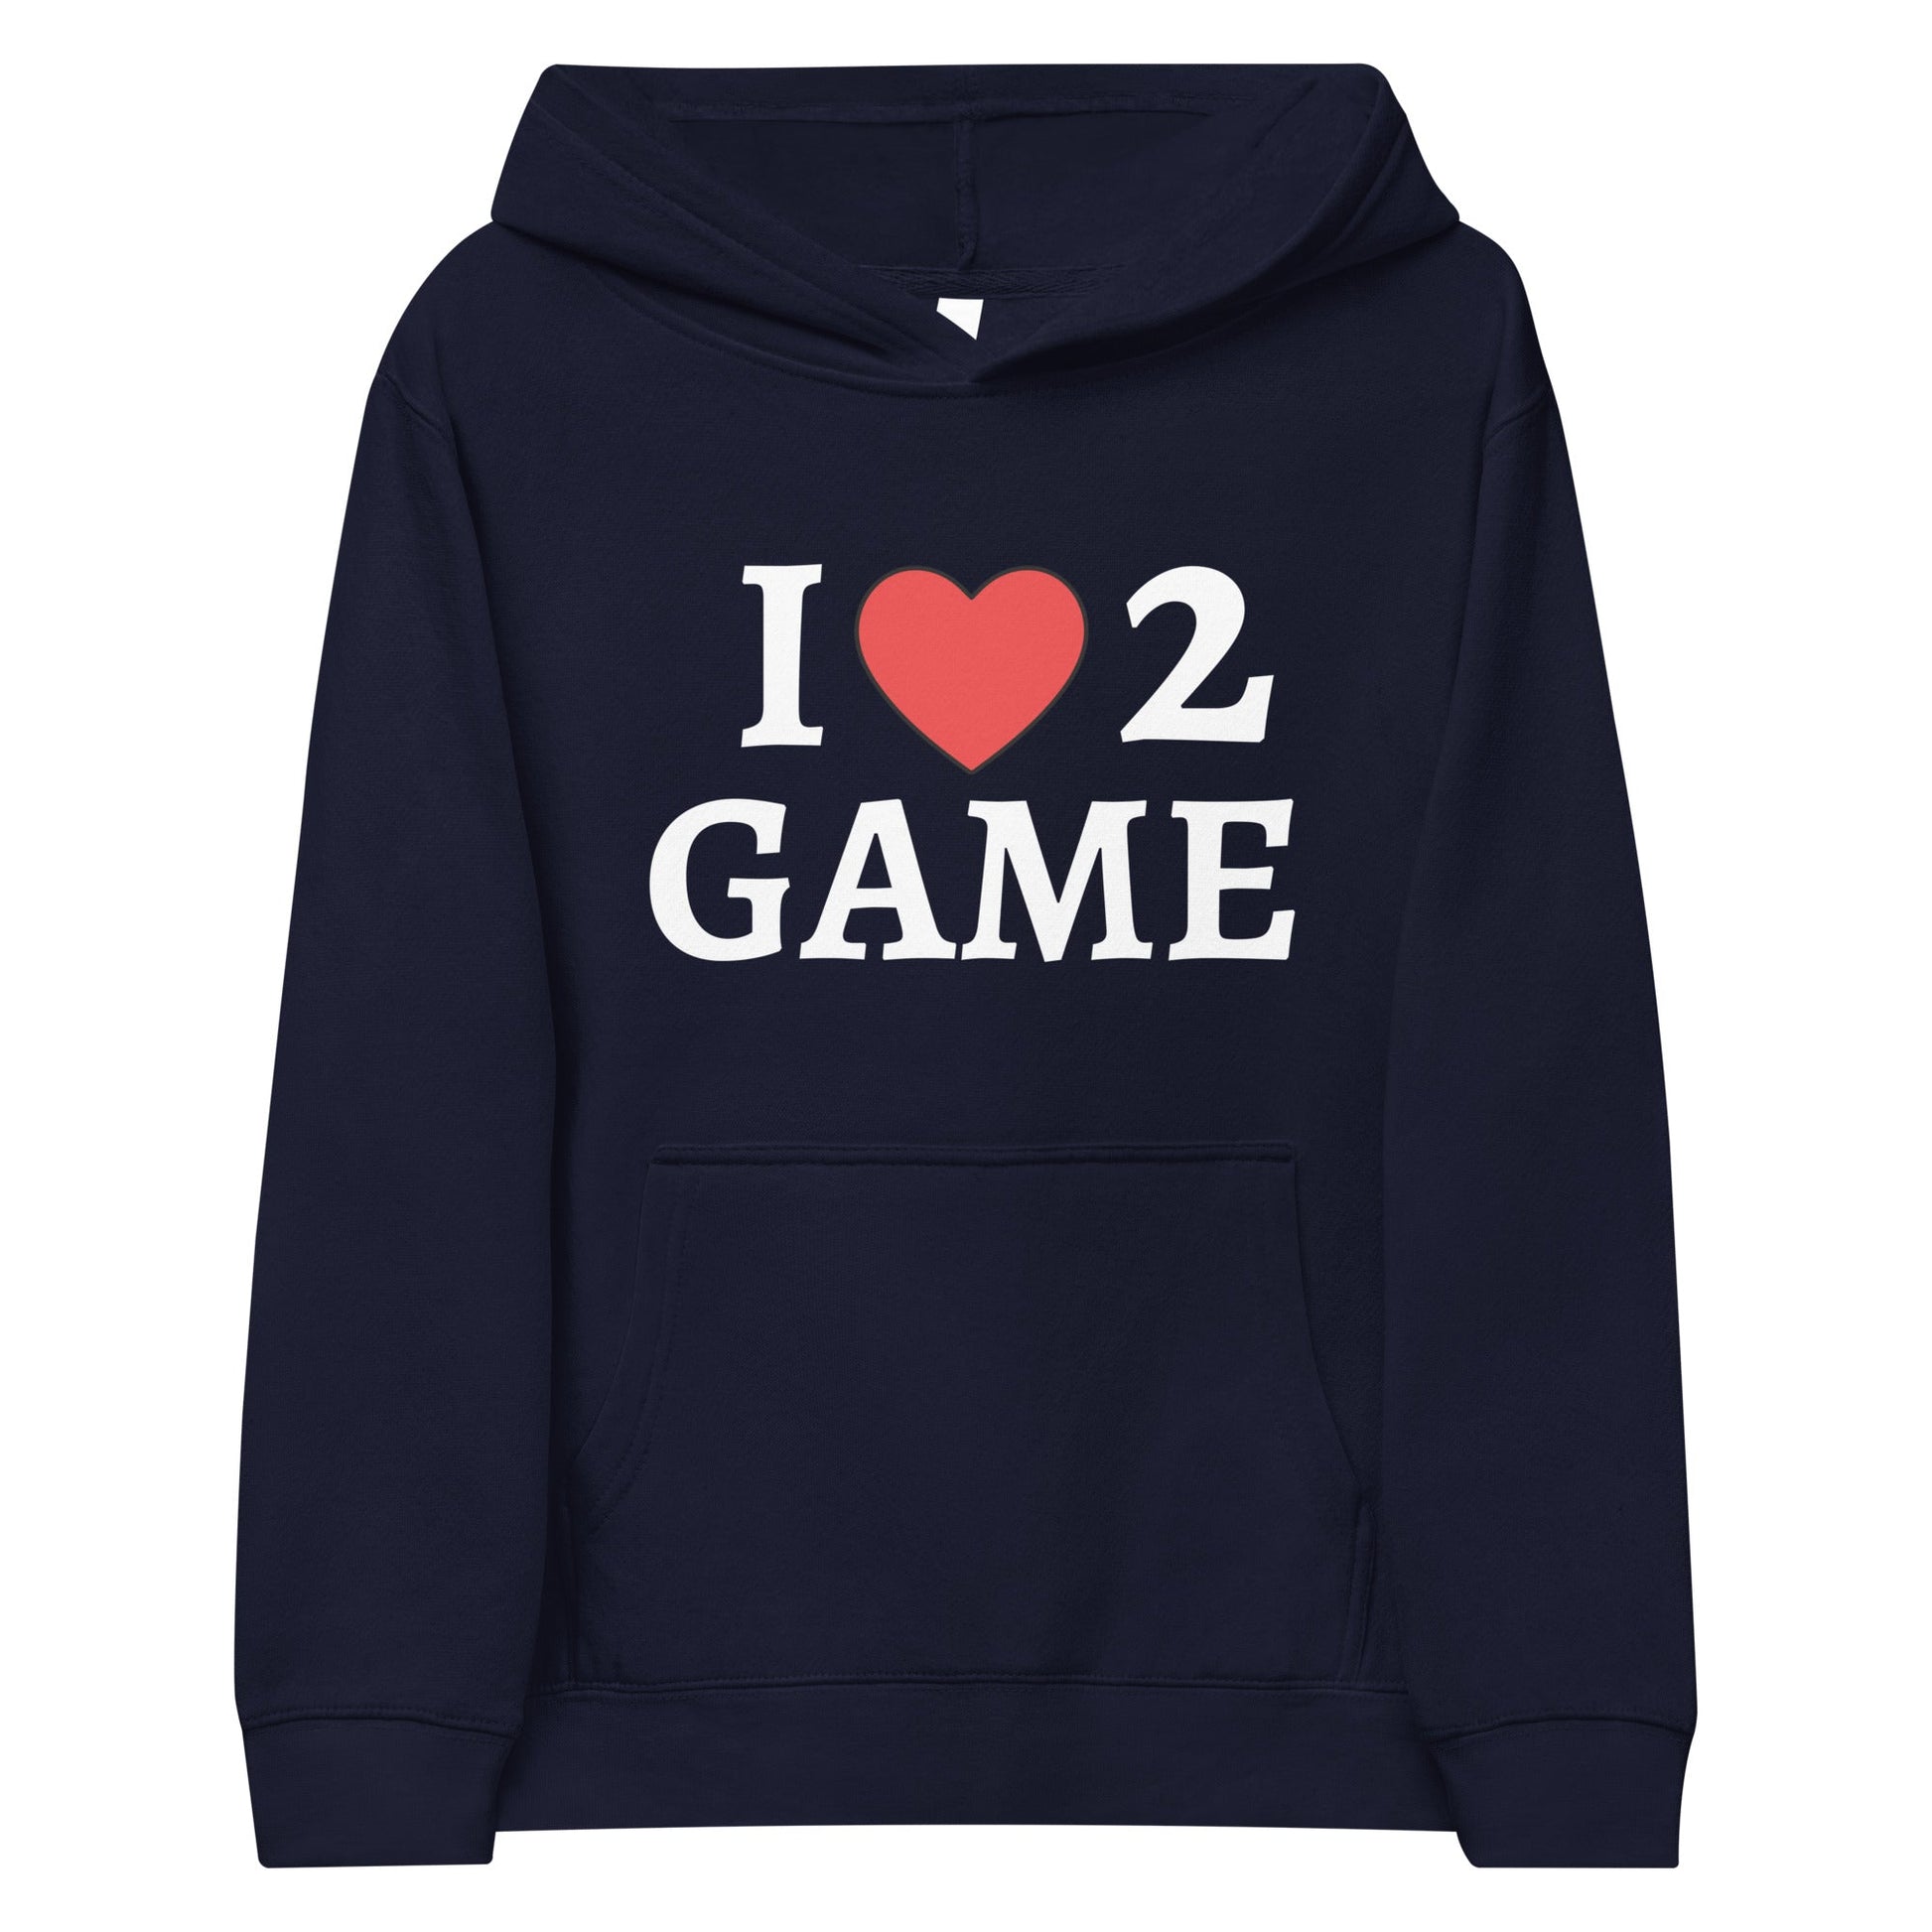 I HEART 2 GAME | Kids fleece hoodie